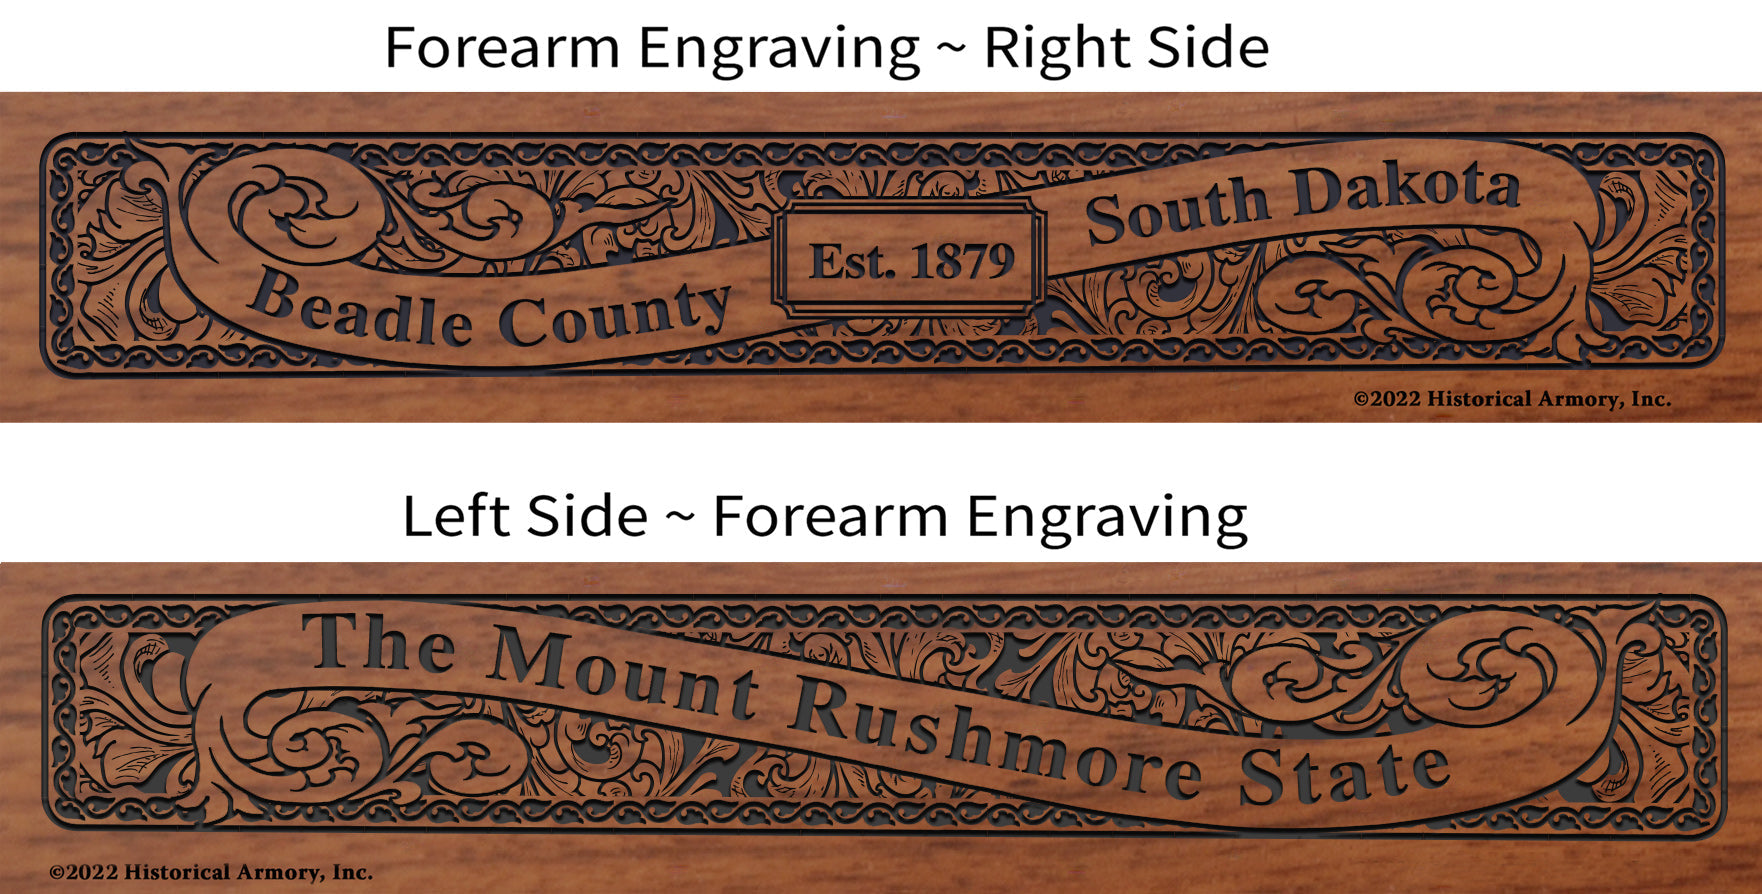 Beadle County South Dakota Engraved Rifle Forearm